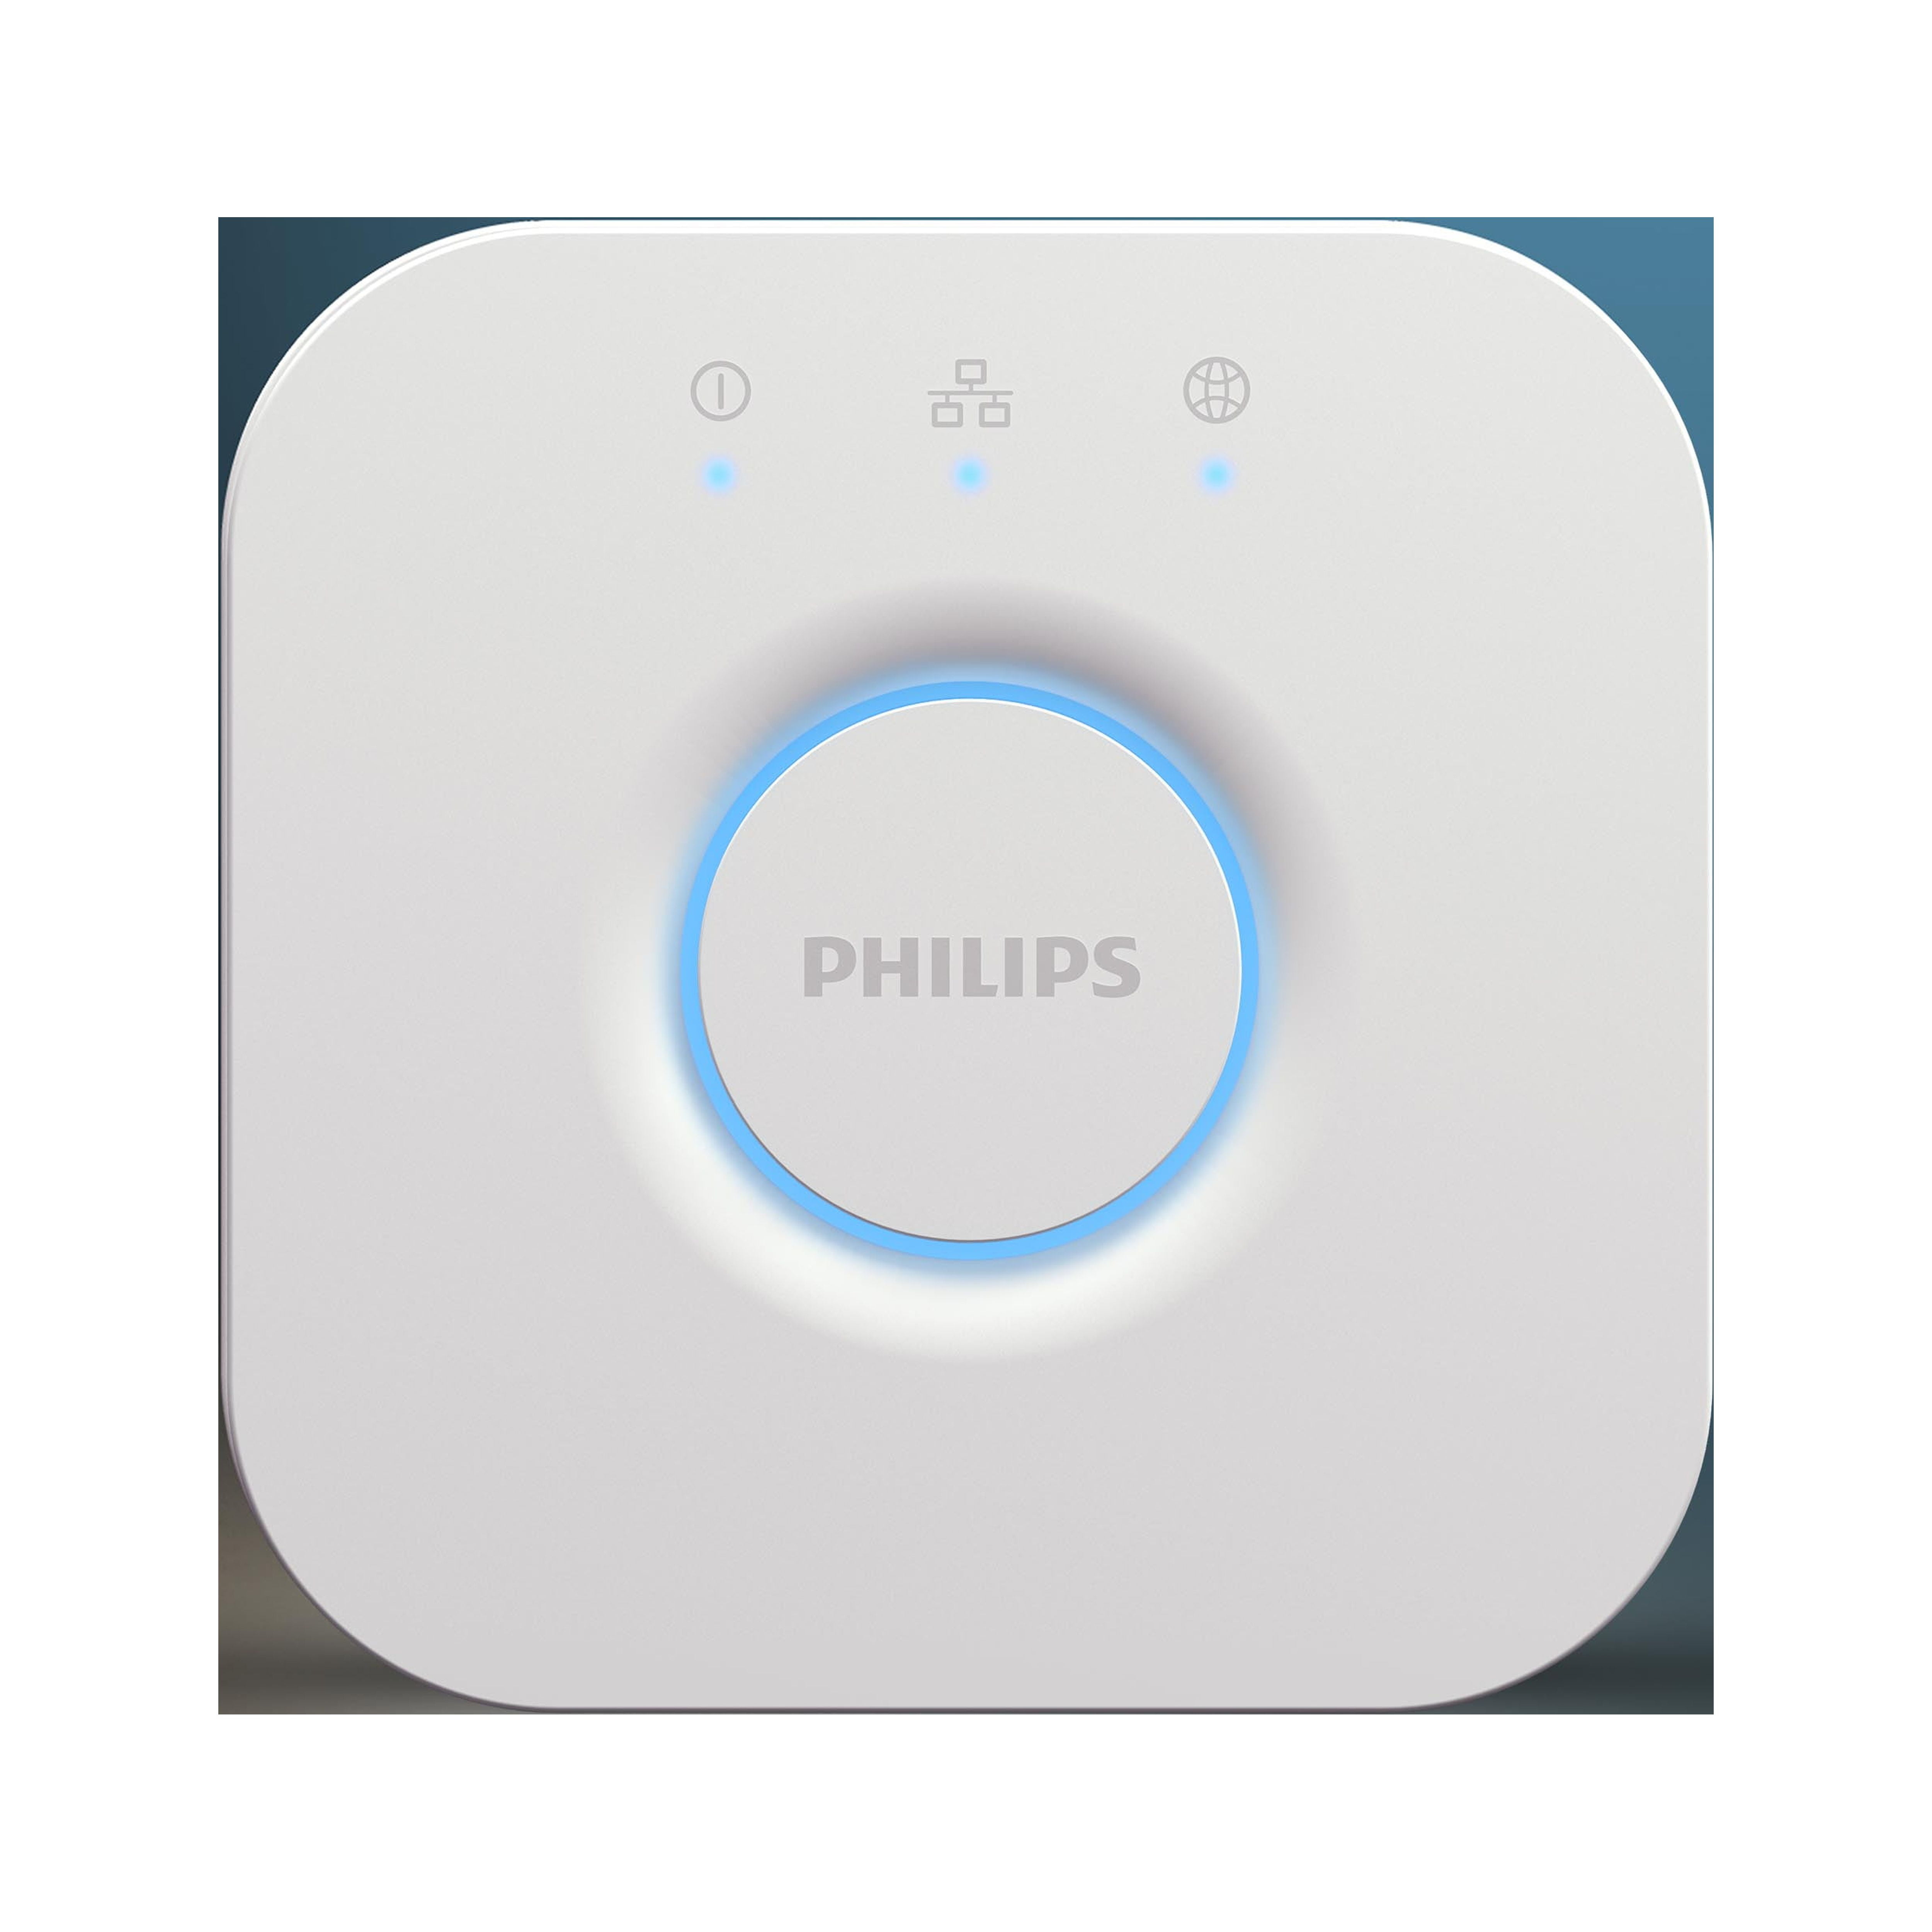 Philips - Interconnect device Hue BRIDGE